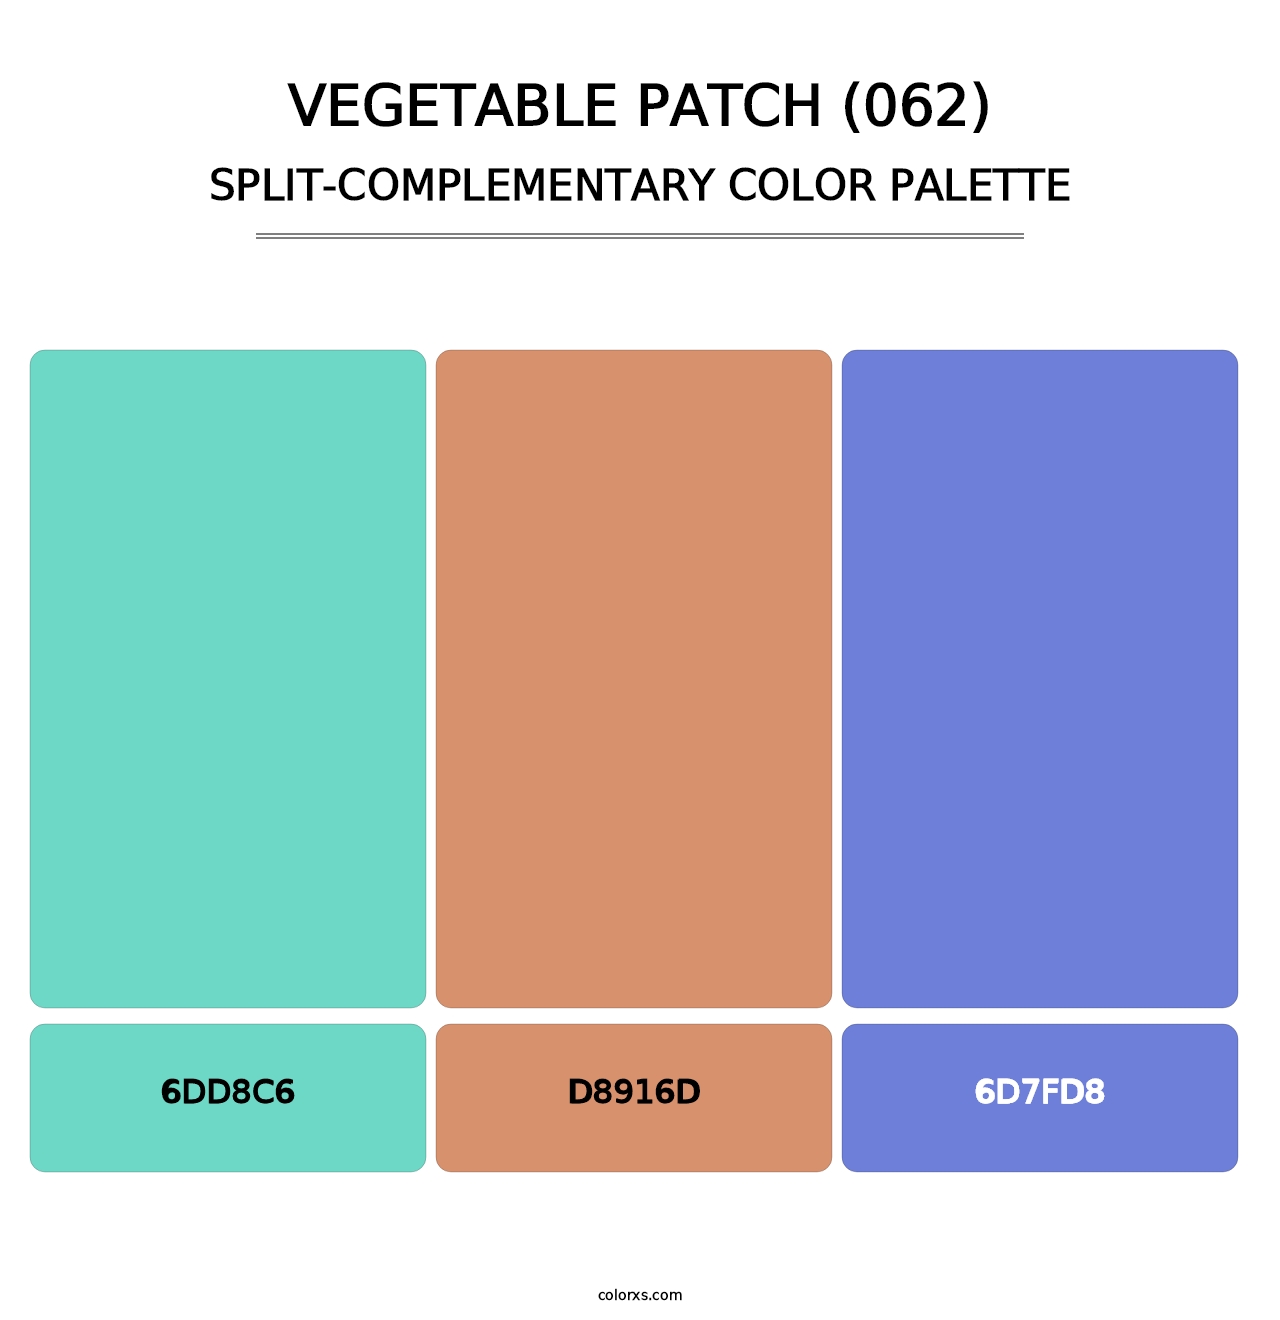 Vegetable Patch (062) - Split-Complementary Color Palette